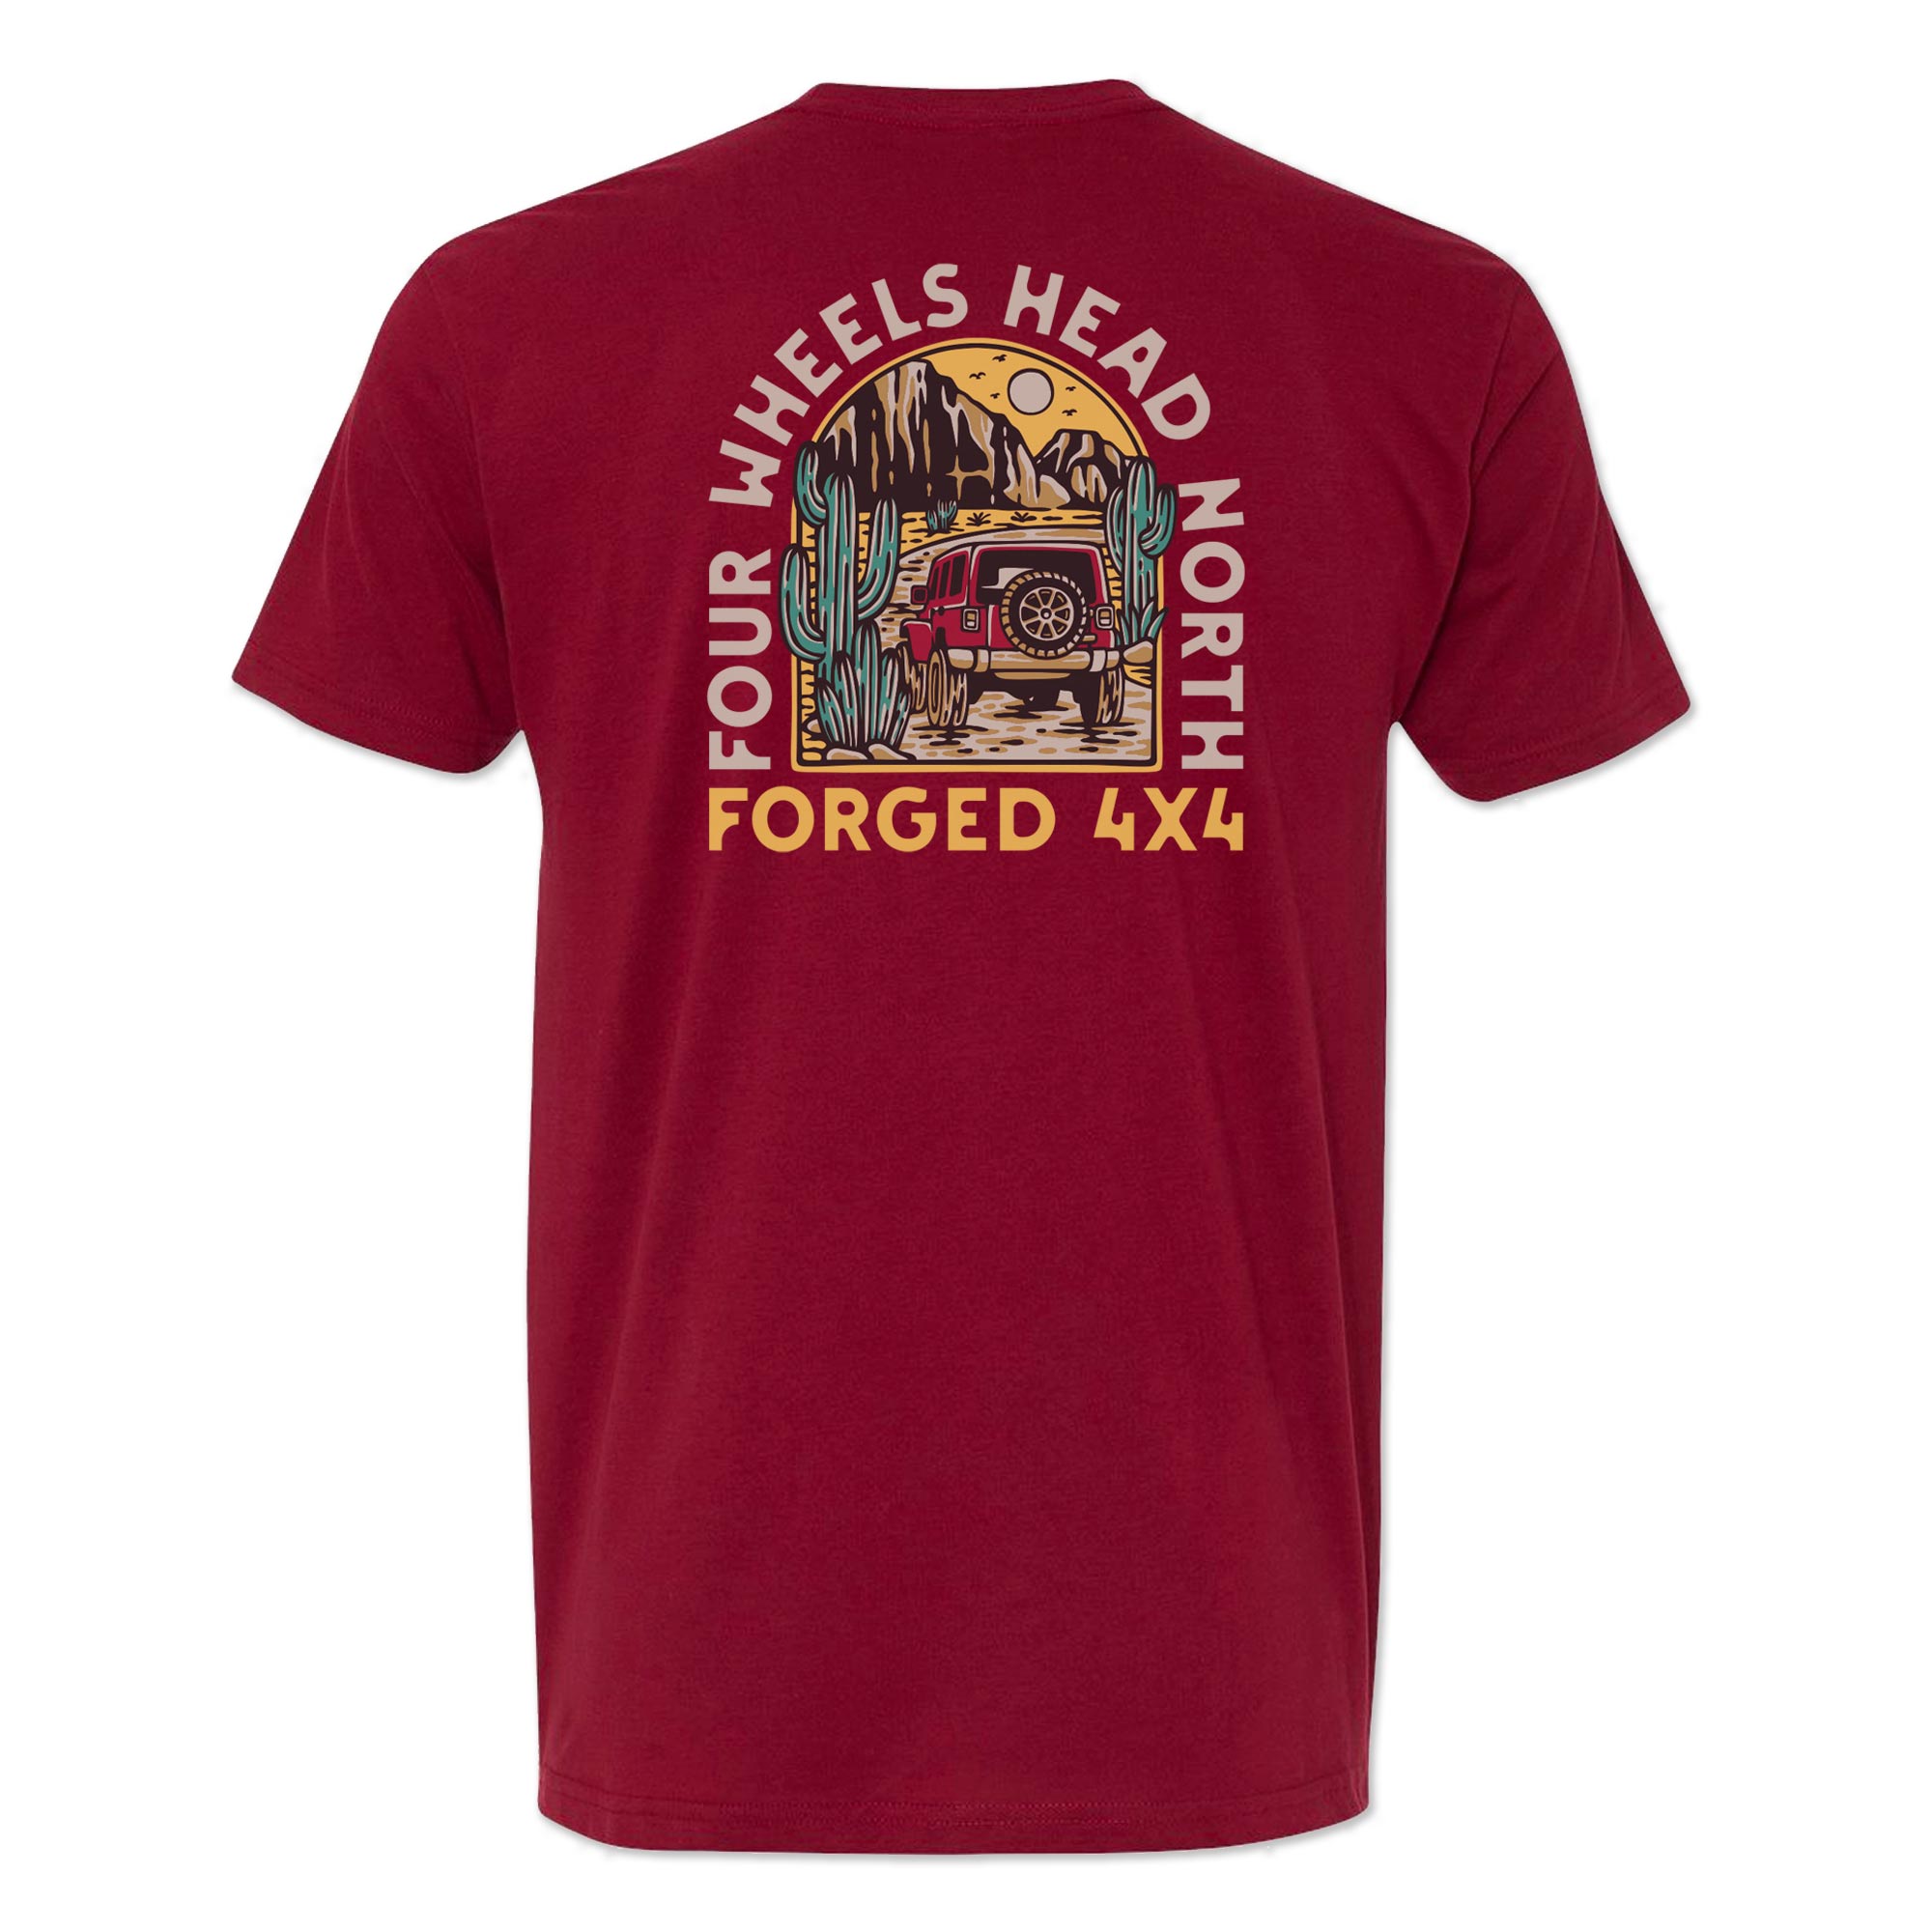 Arizona T-Shirt - Forged4x4